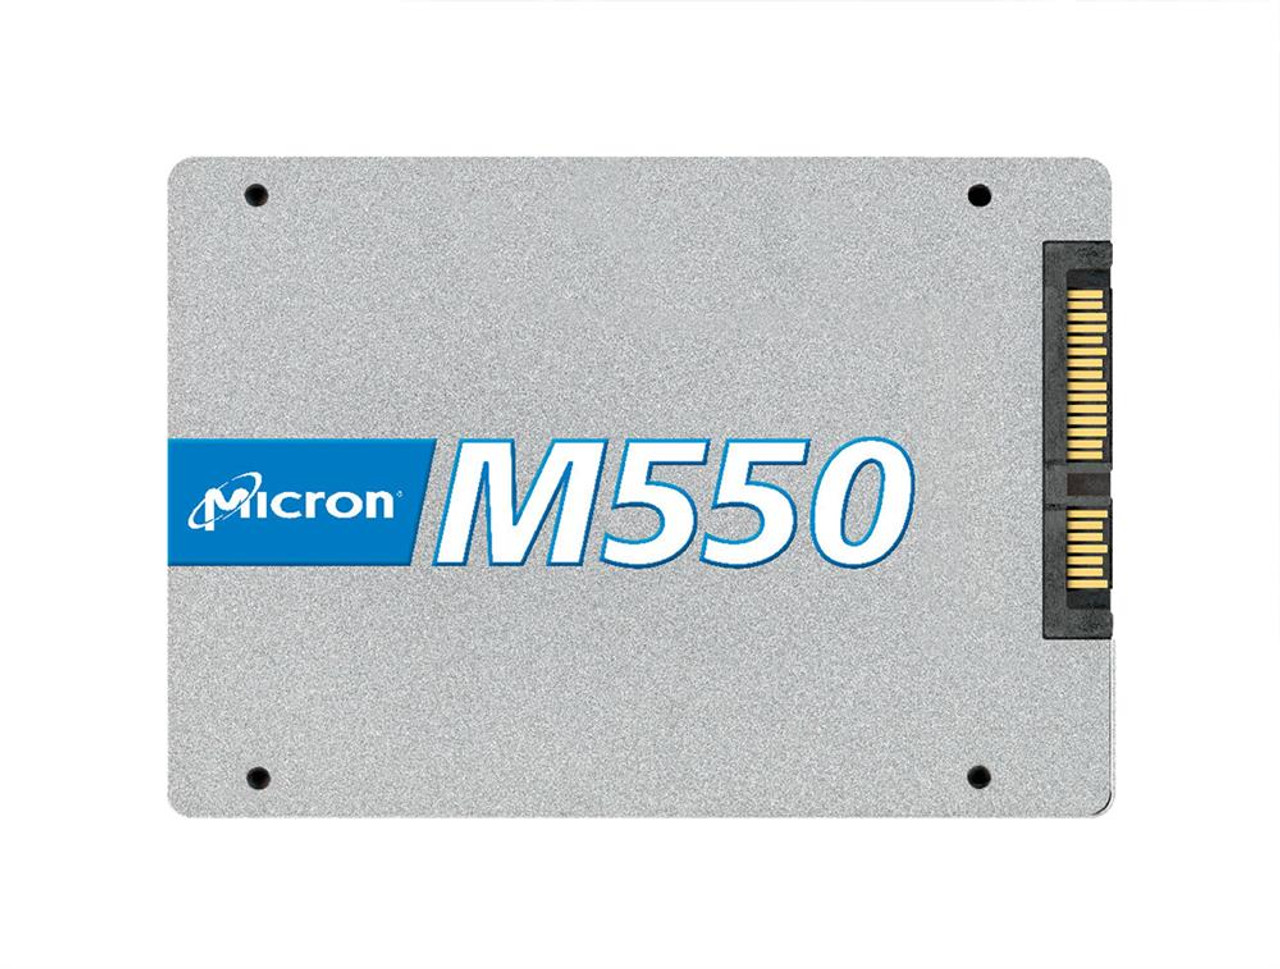 MTFDDAK256MAY-1AH12ABDA Micron M550 256GB MLC SATA 6Gbps (SED) 2.5-inch Internal Solid State Drive (SSD)